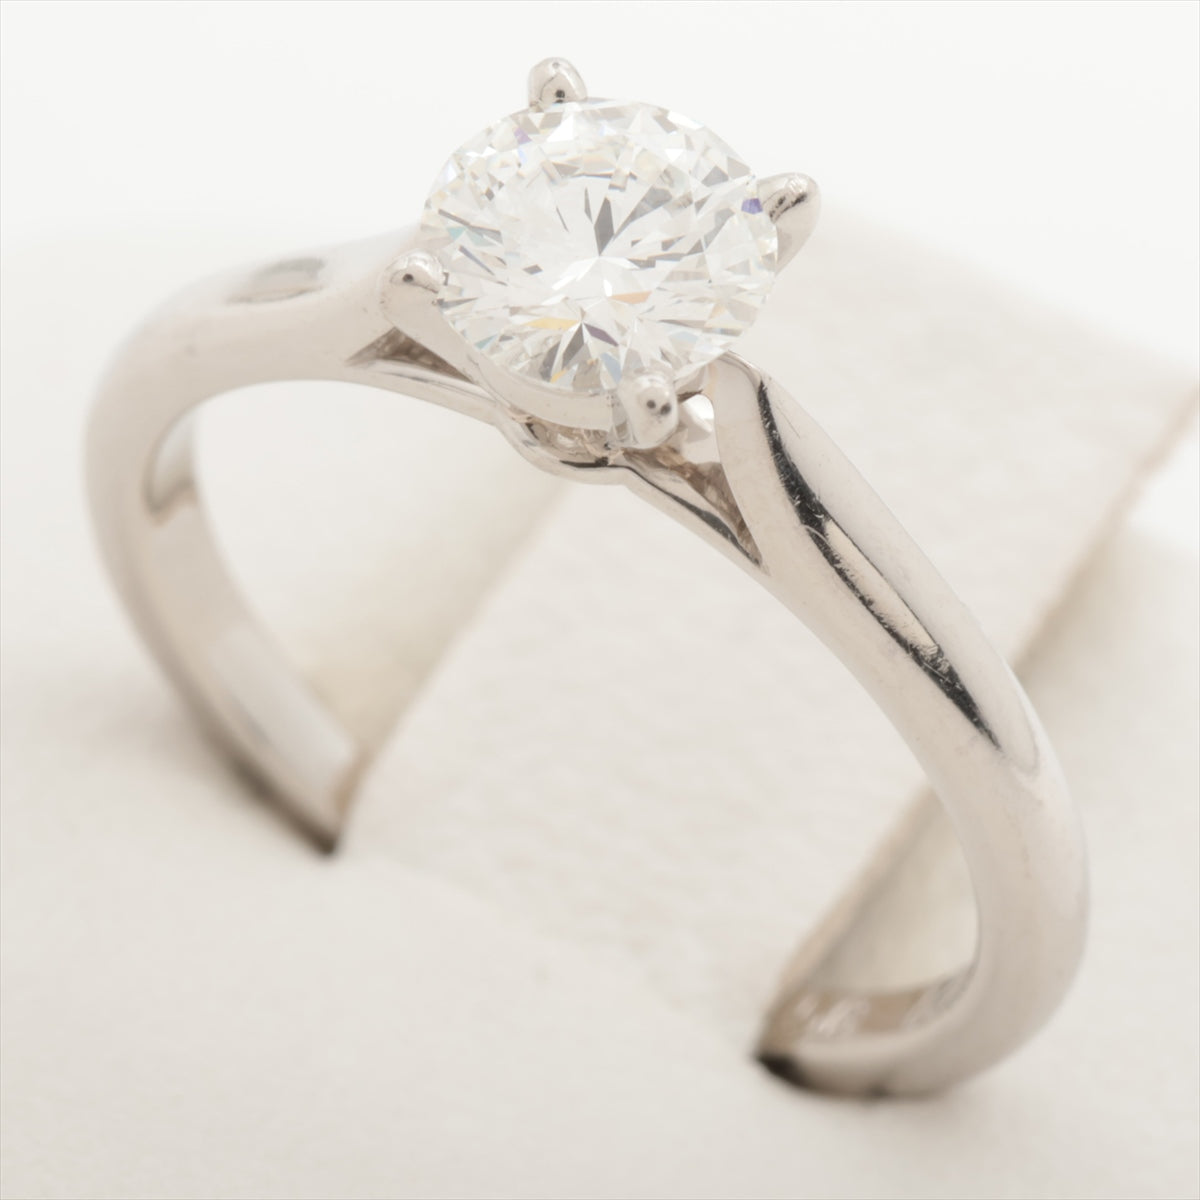 Cartier Solitaire 1895 diamond rings Pt950 3.0g 0.56 48